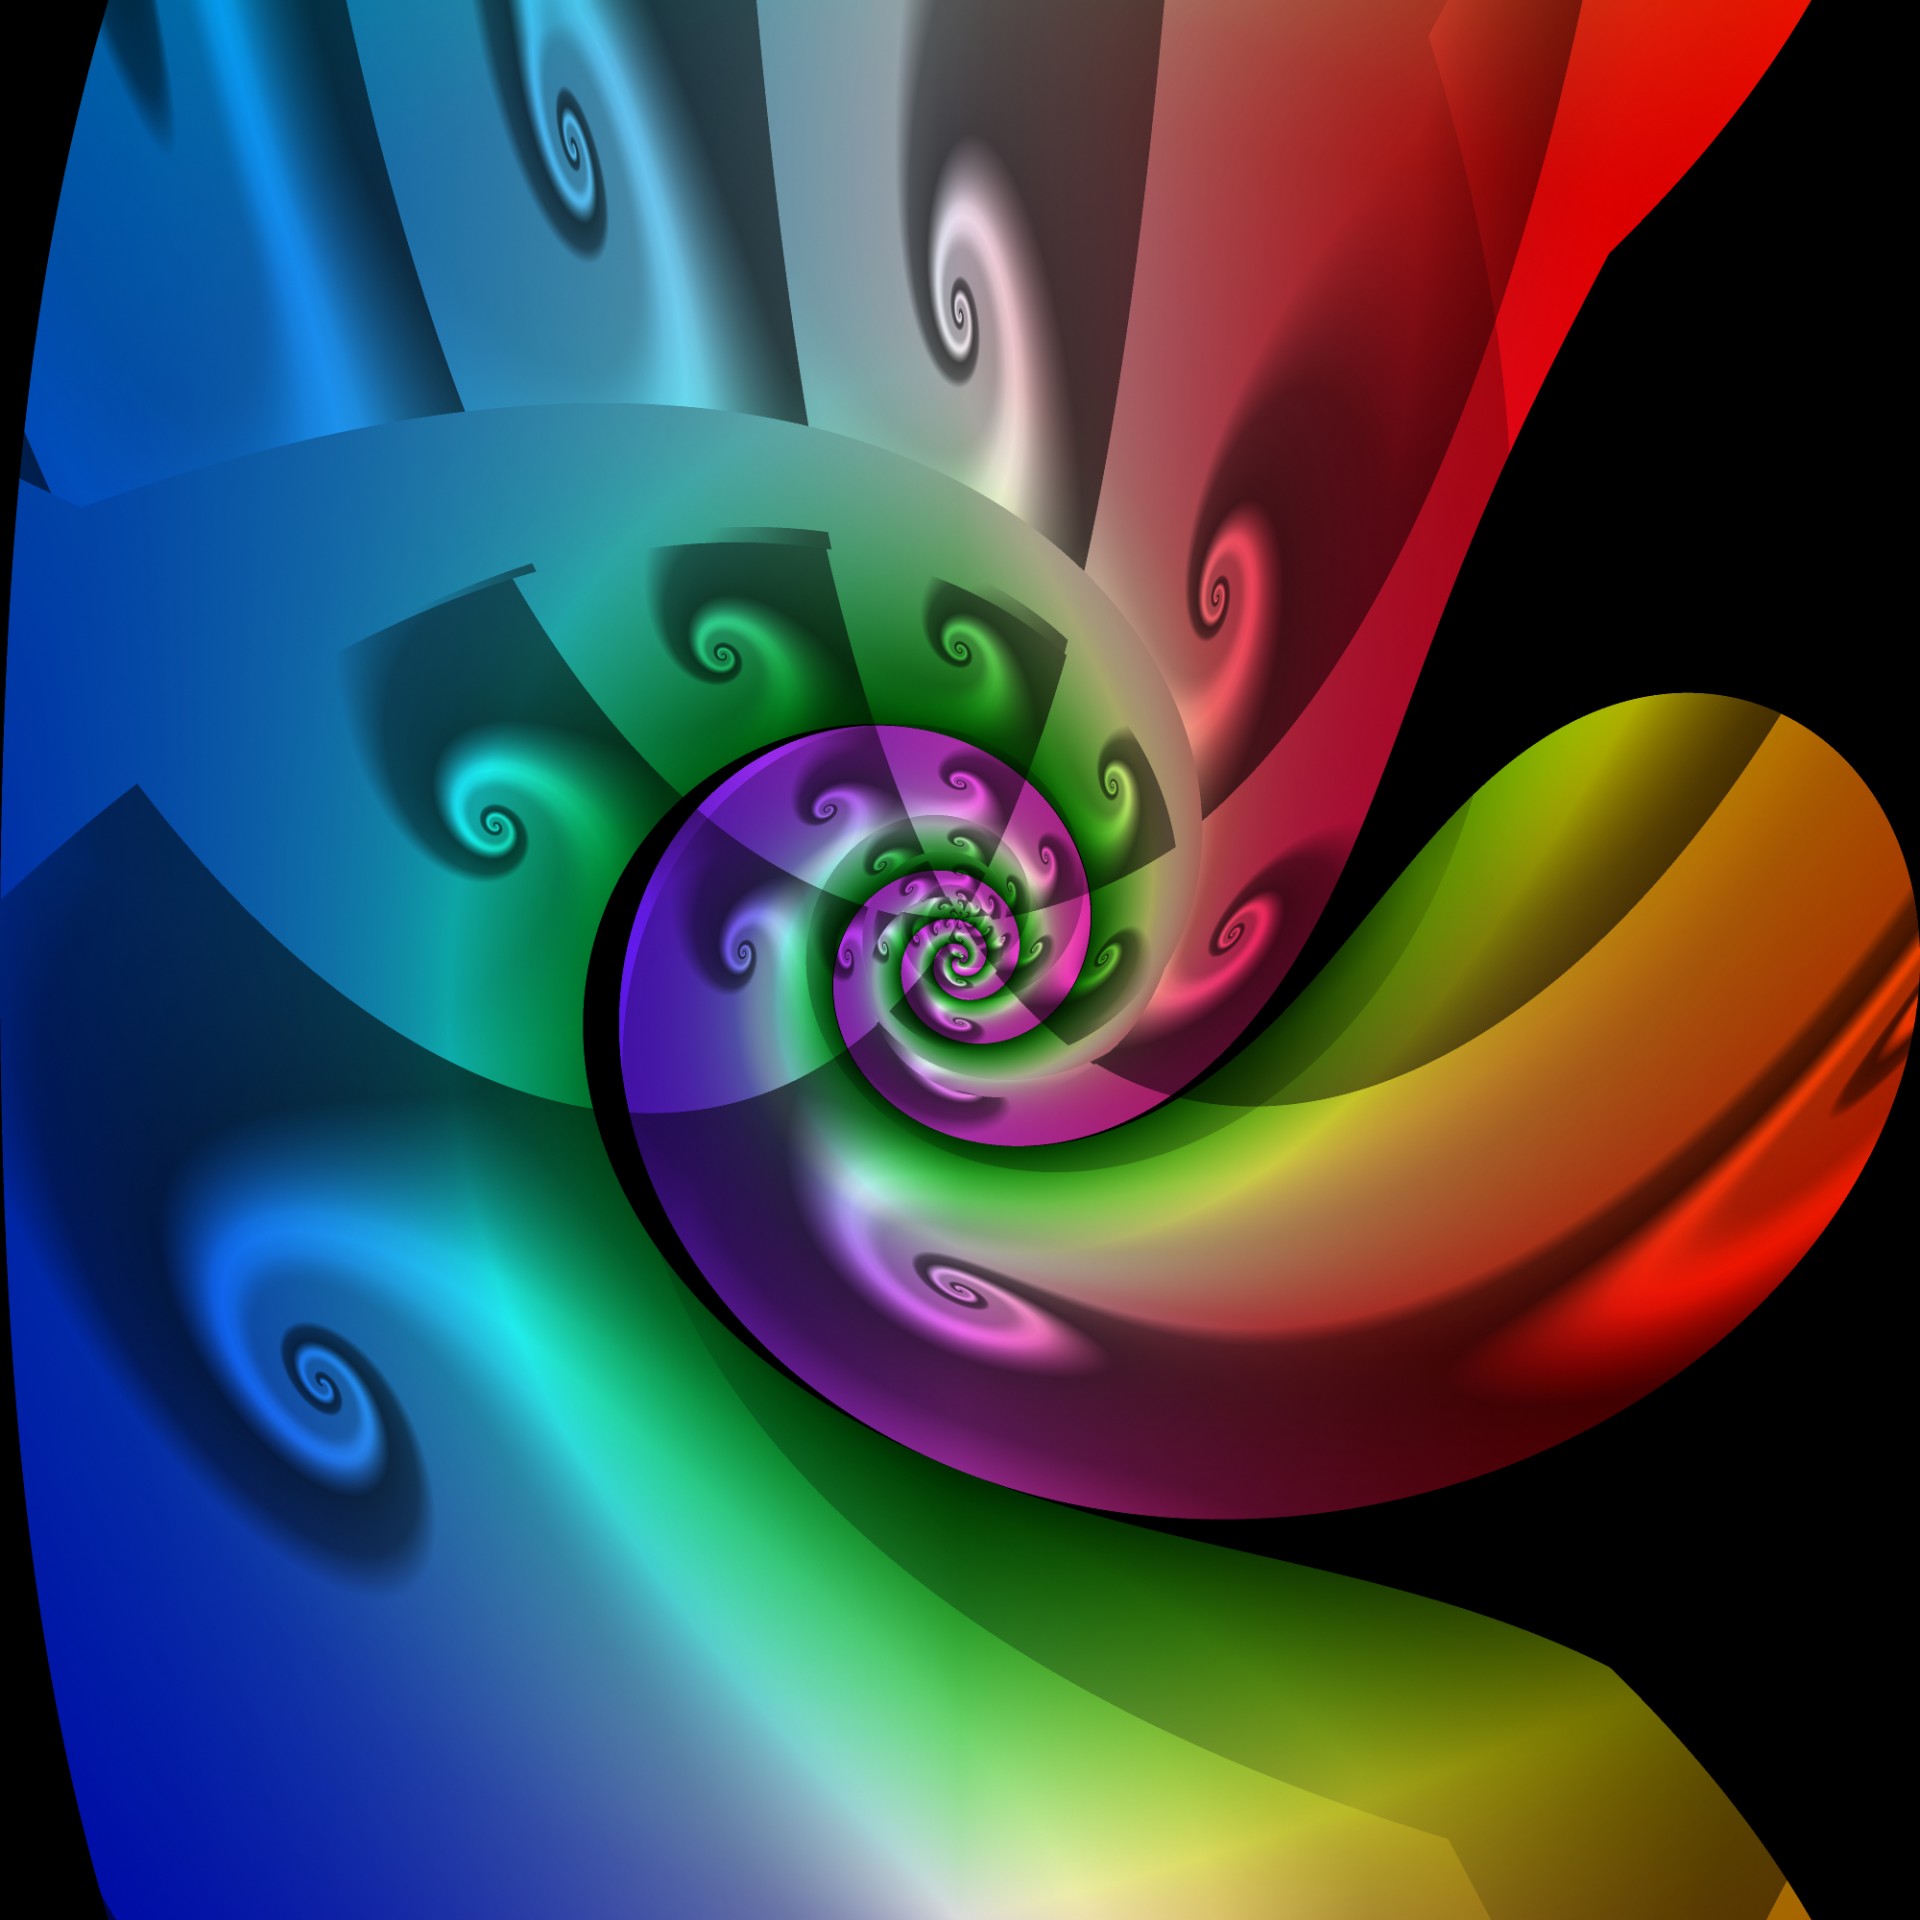 Swirls Abstracts Patterns